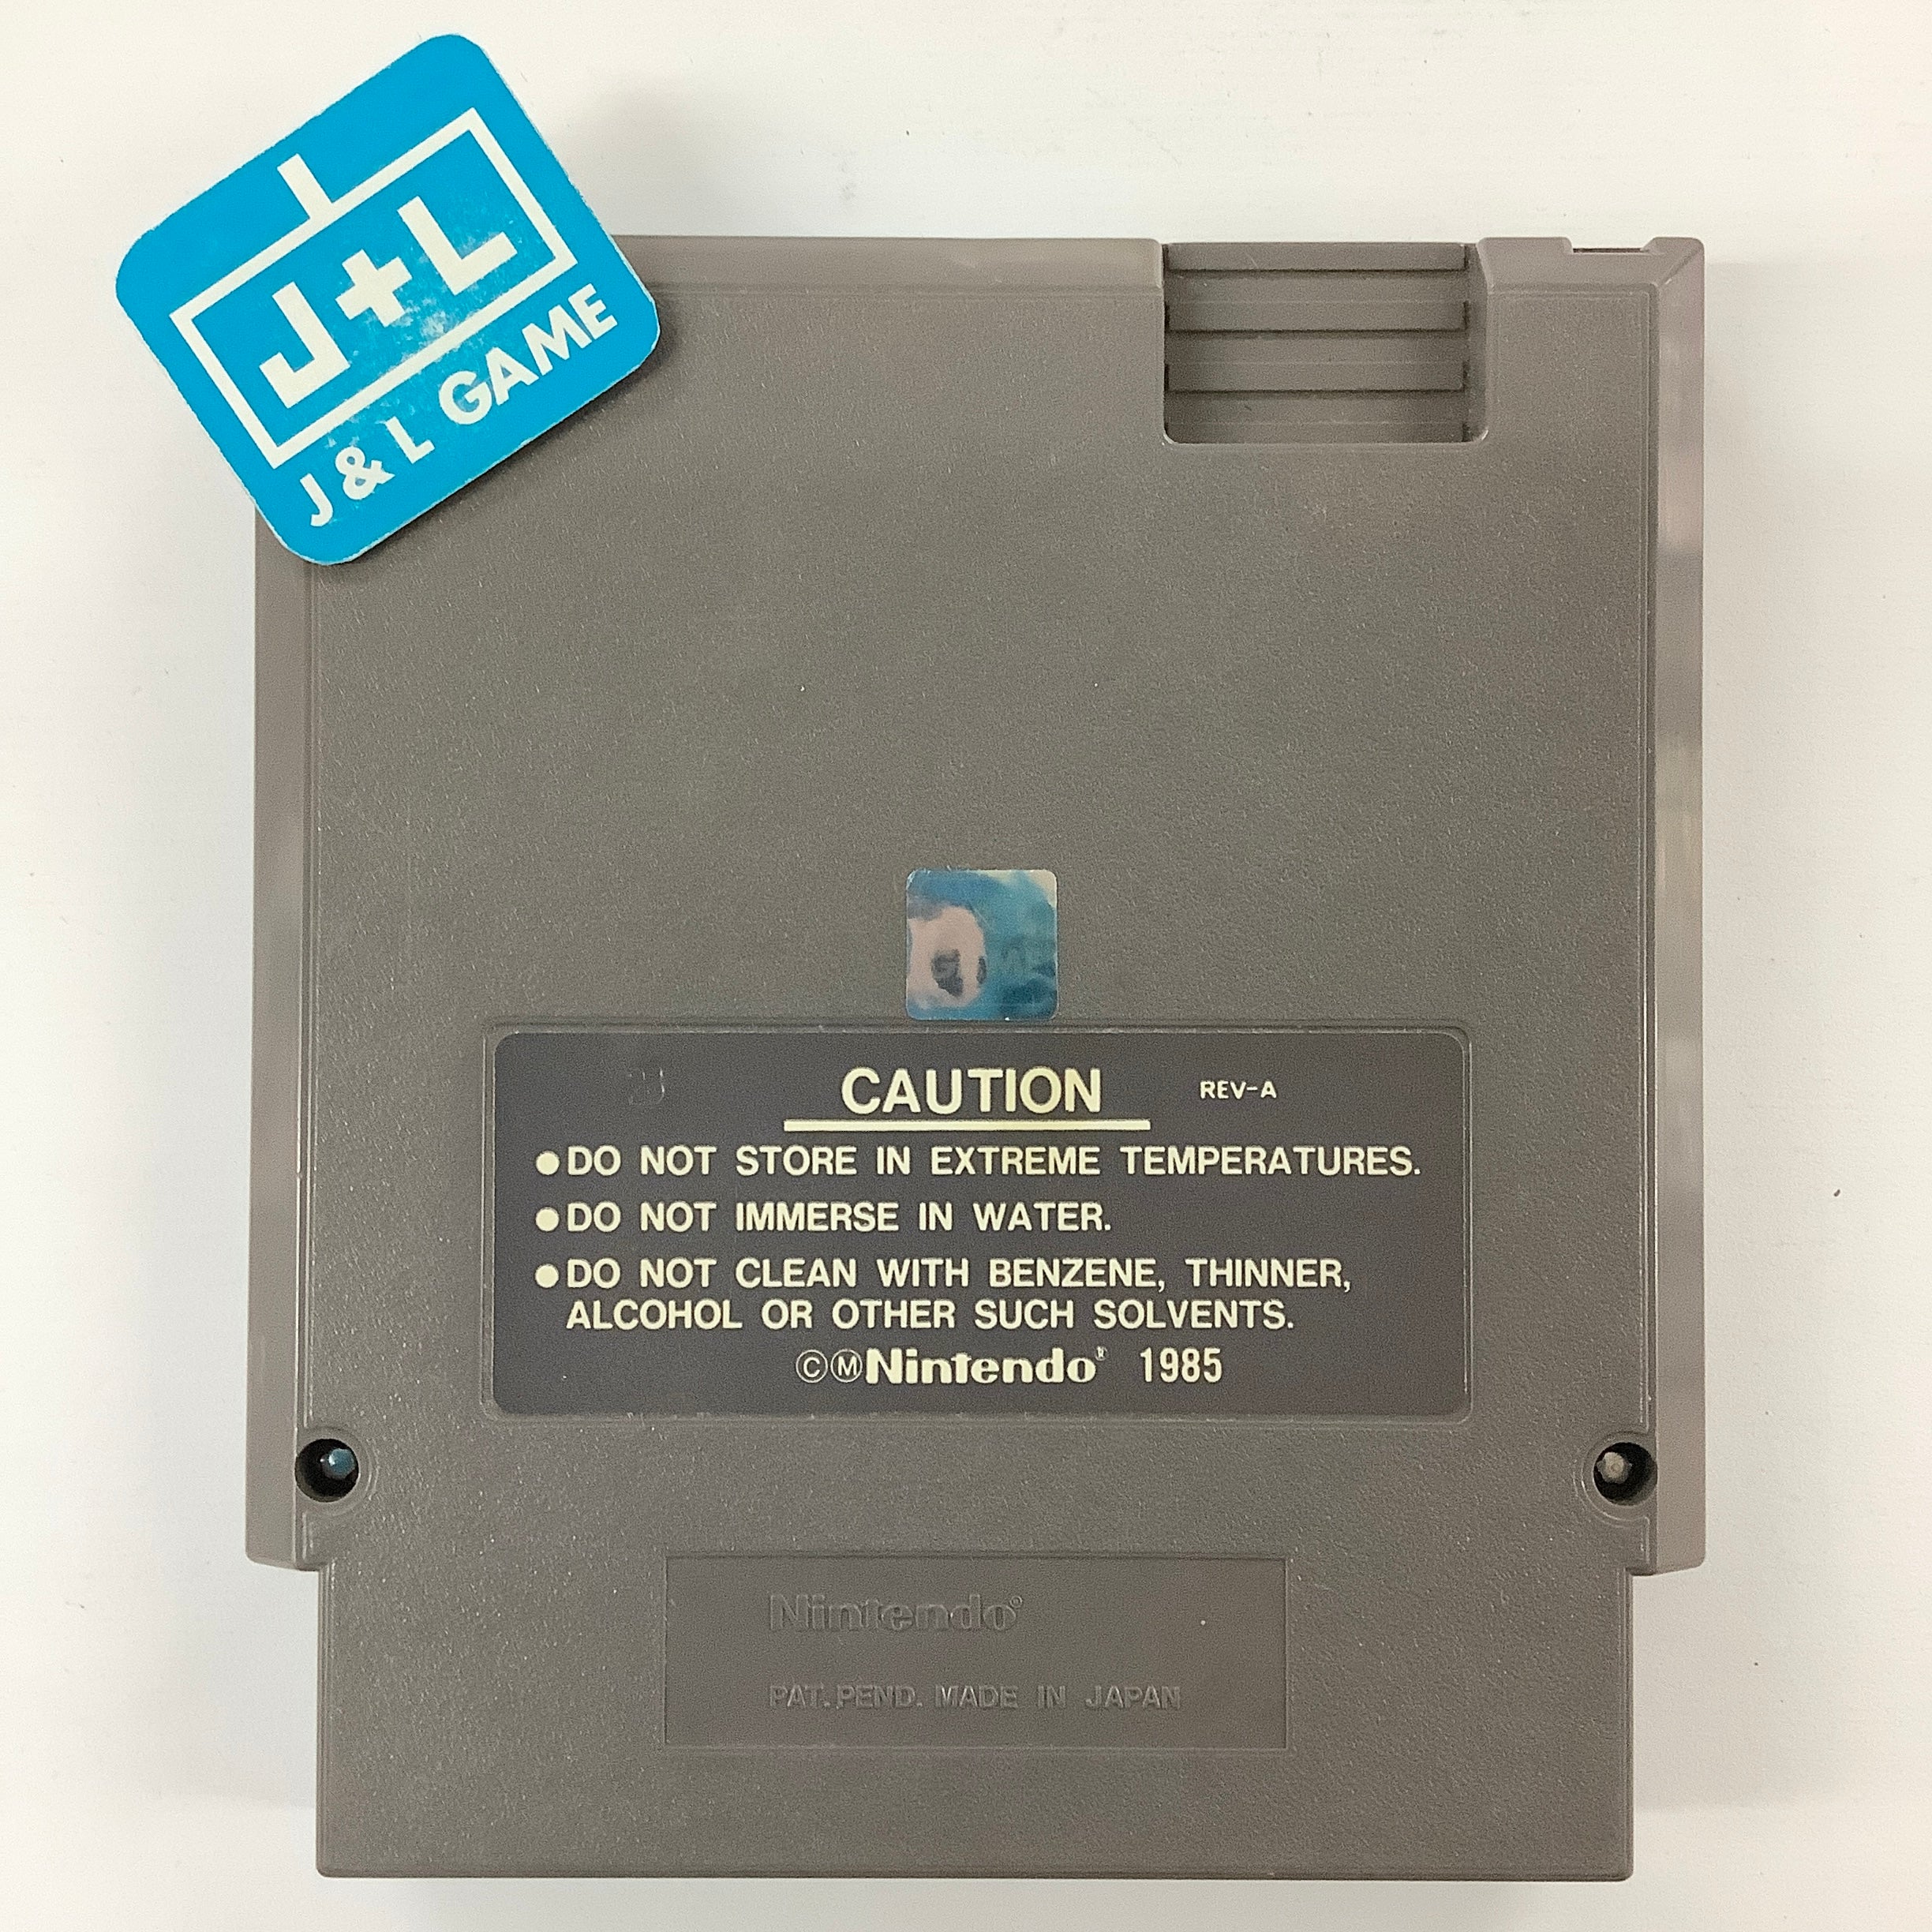 Rad Racer II - (NES) Nintendo Entertainment System [Pre-Owned] Video Games SquareSoft   